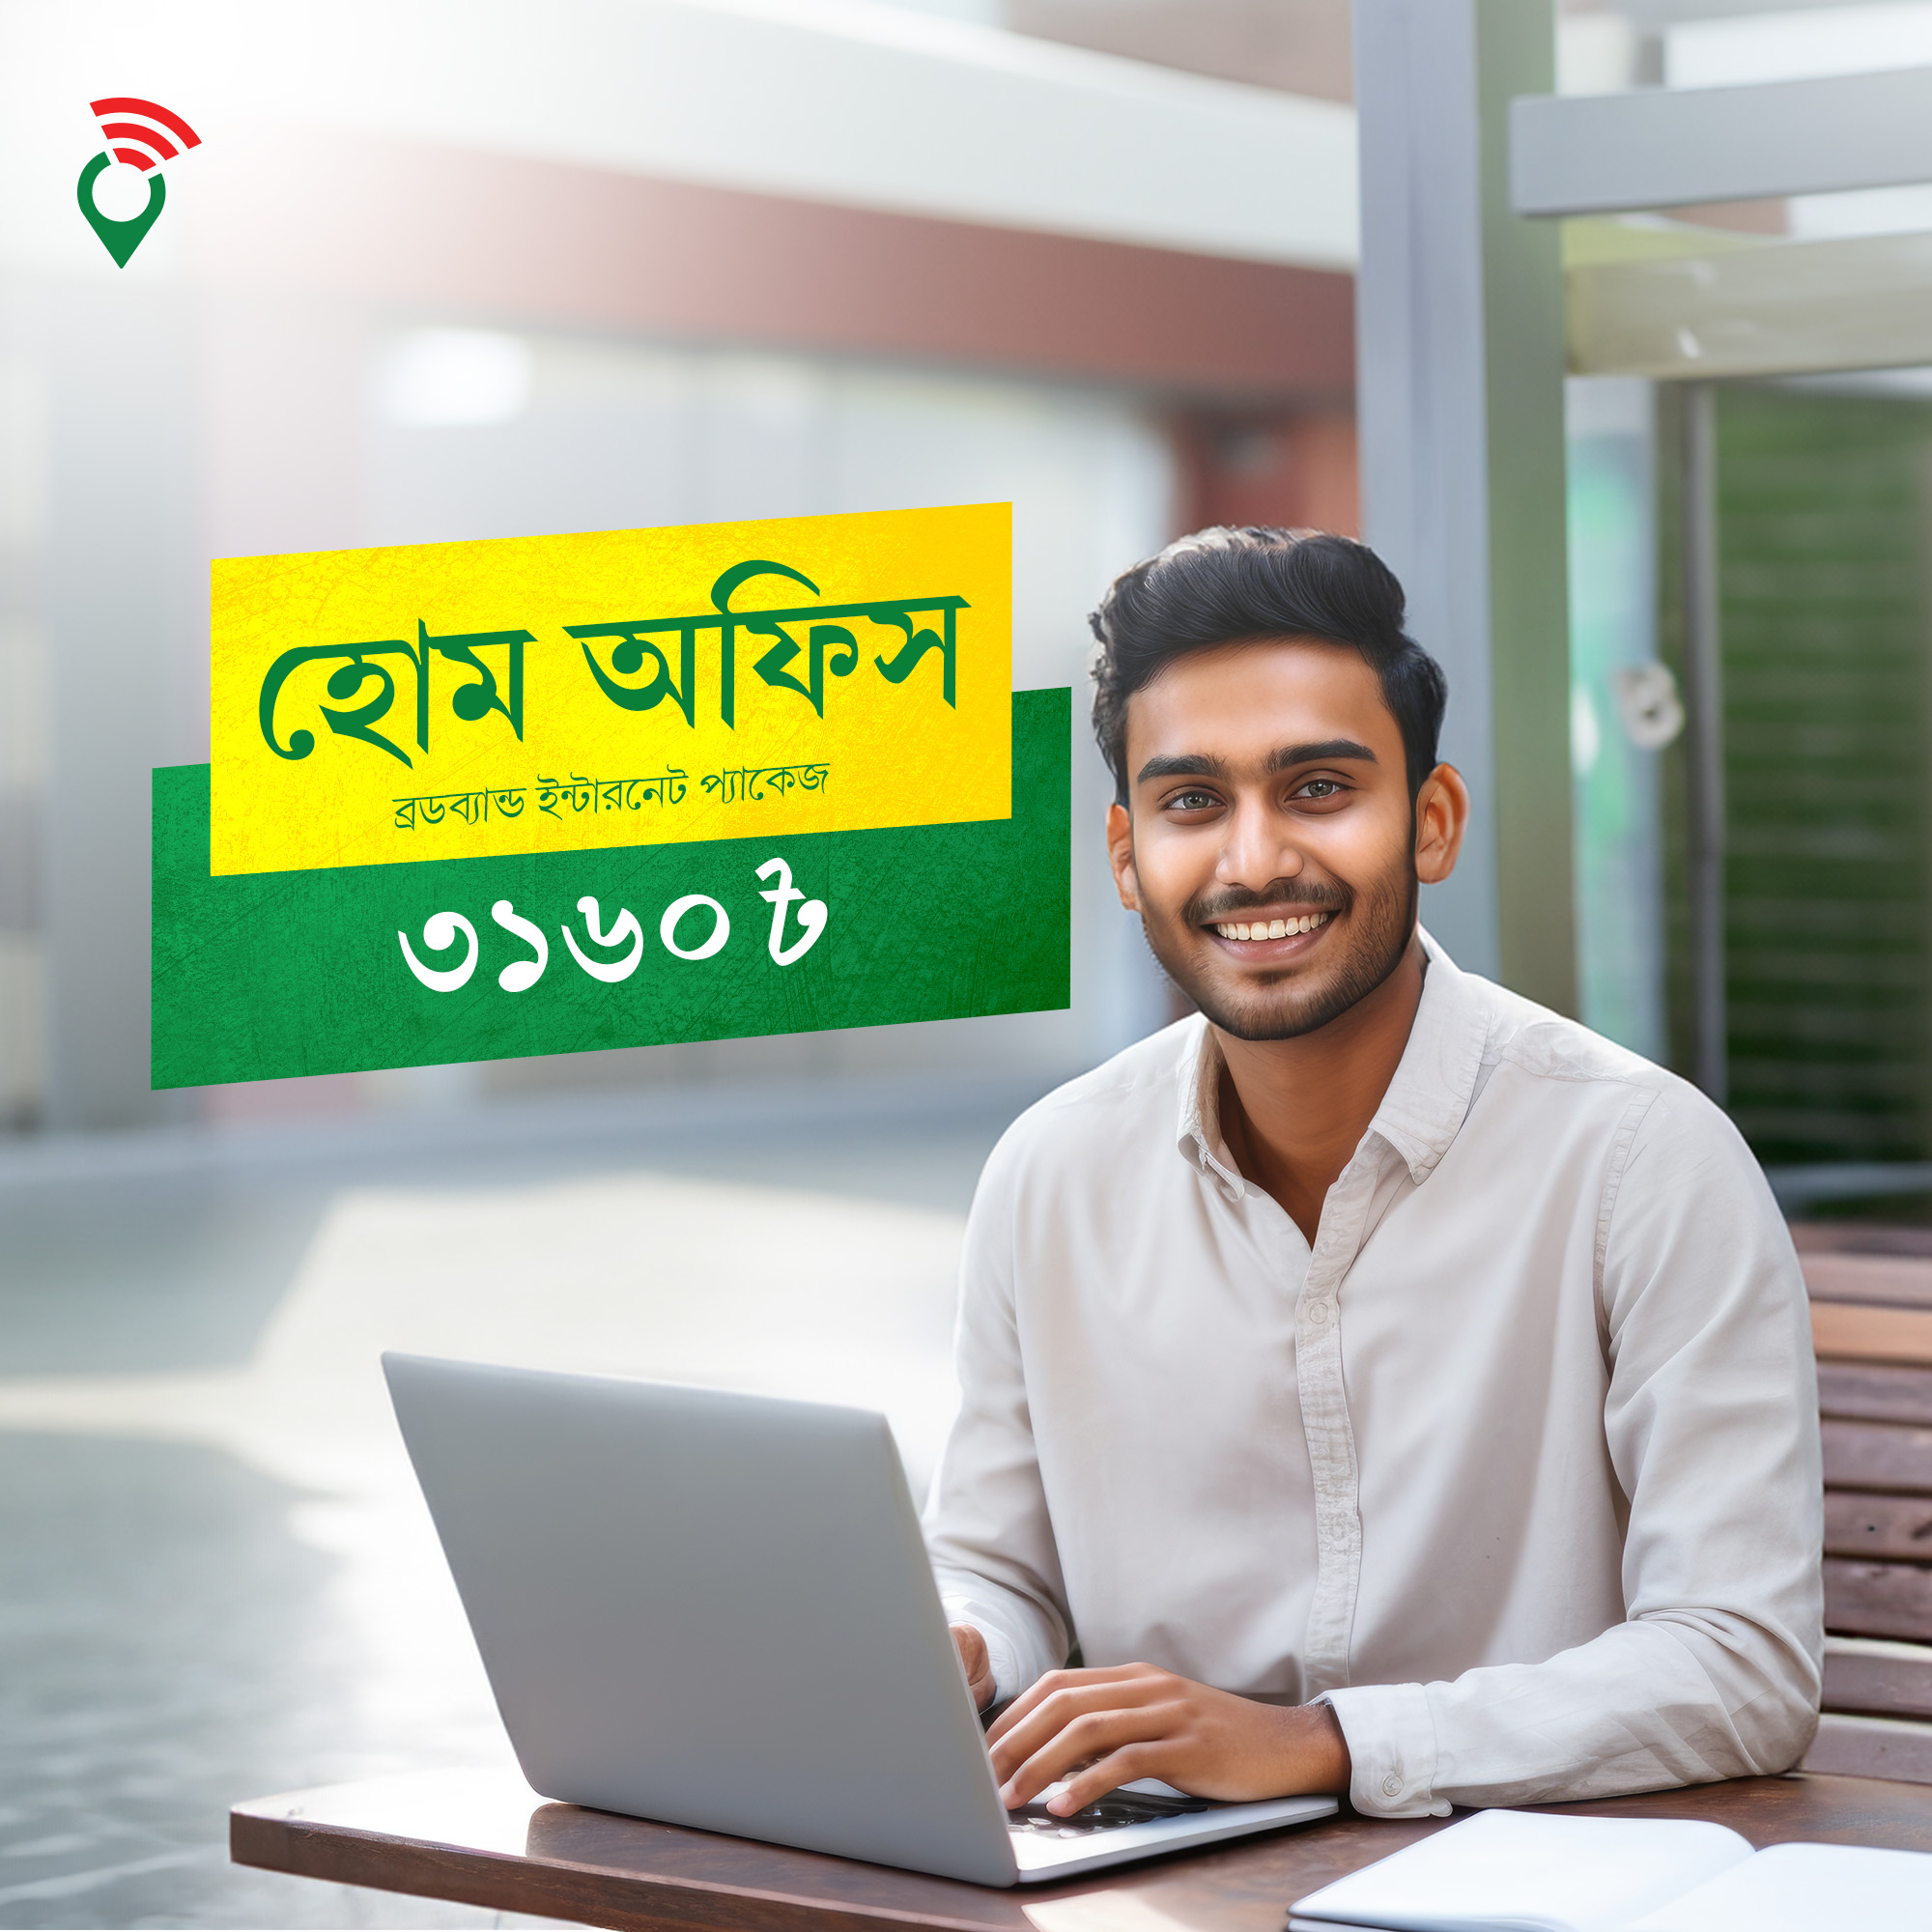 Best Home Office Broadband internet package in Bangladesh